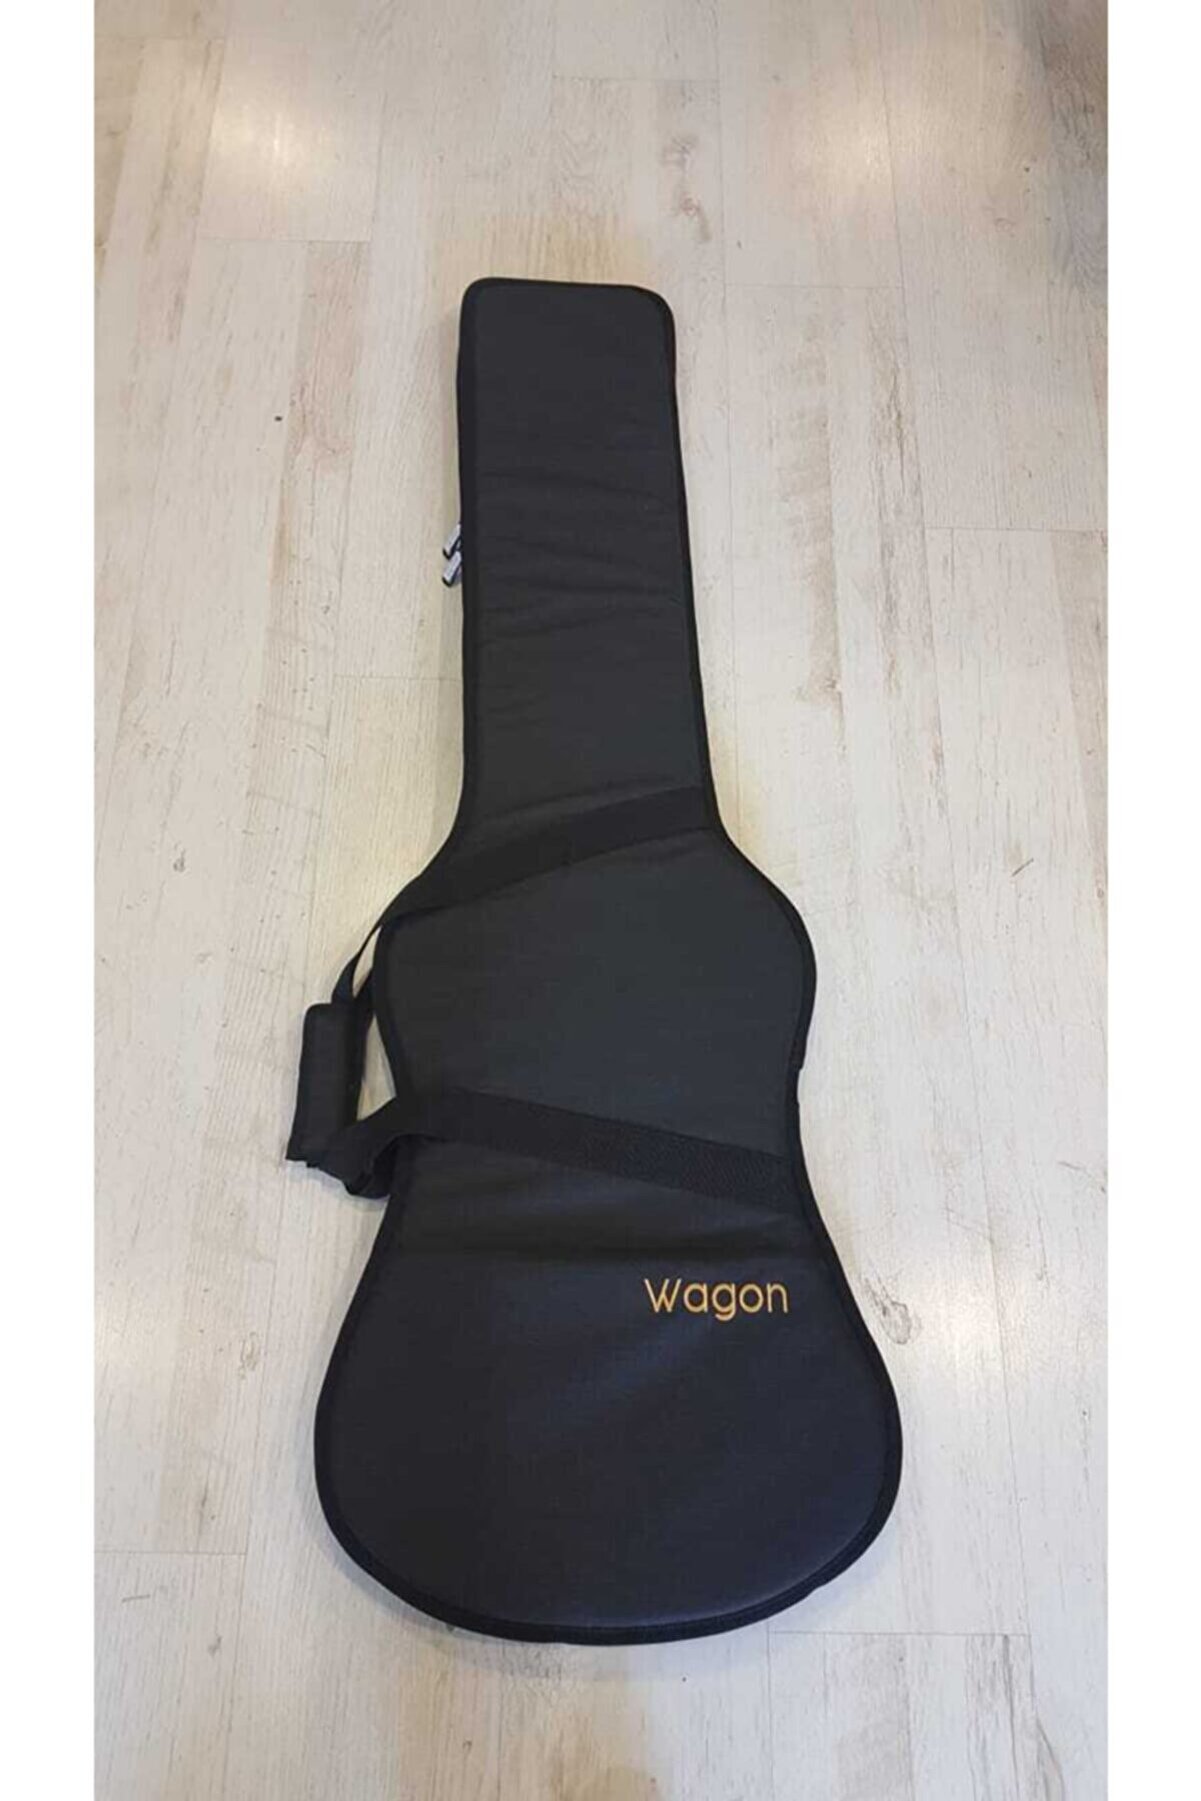 Wagon Case Wagoncase Klasik Gitar Gig-bag Case Kılıfı